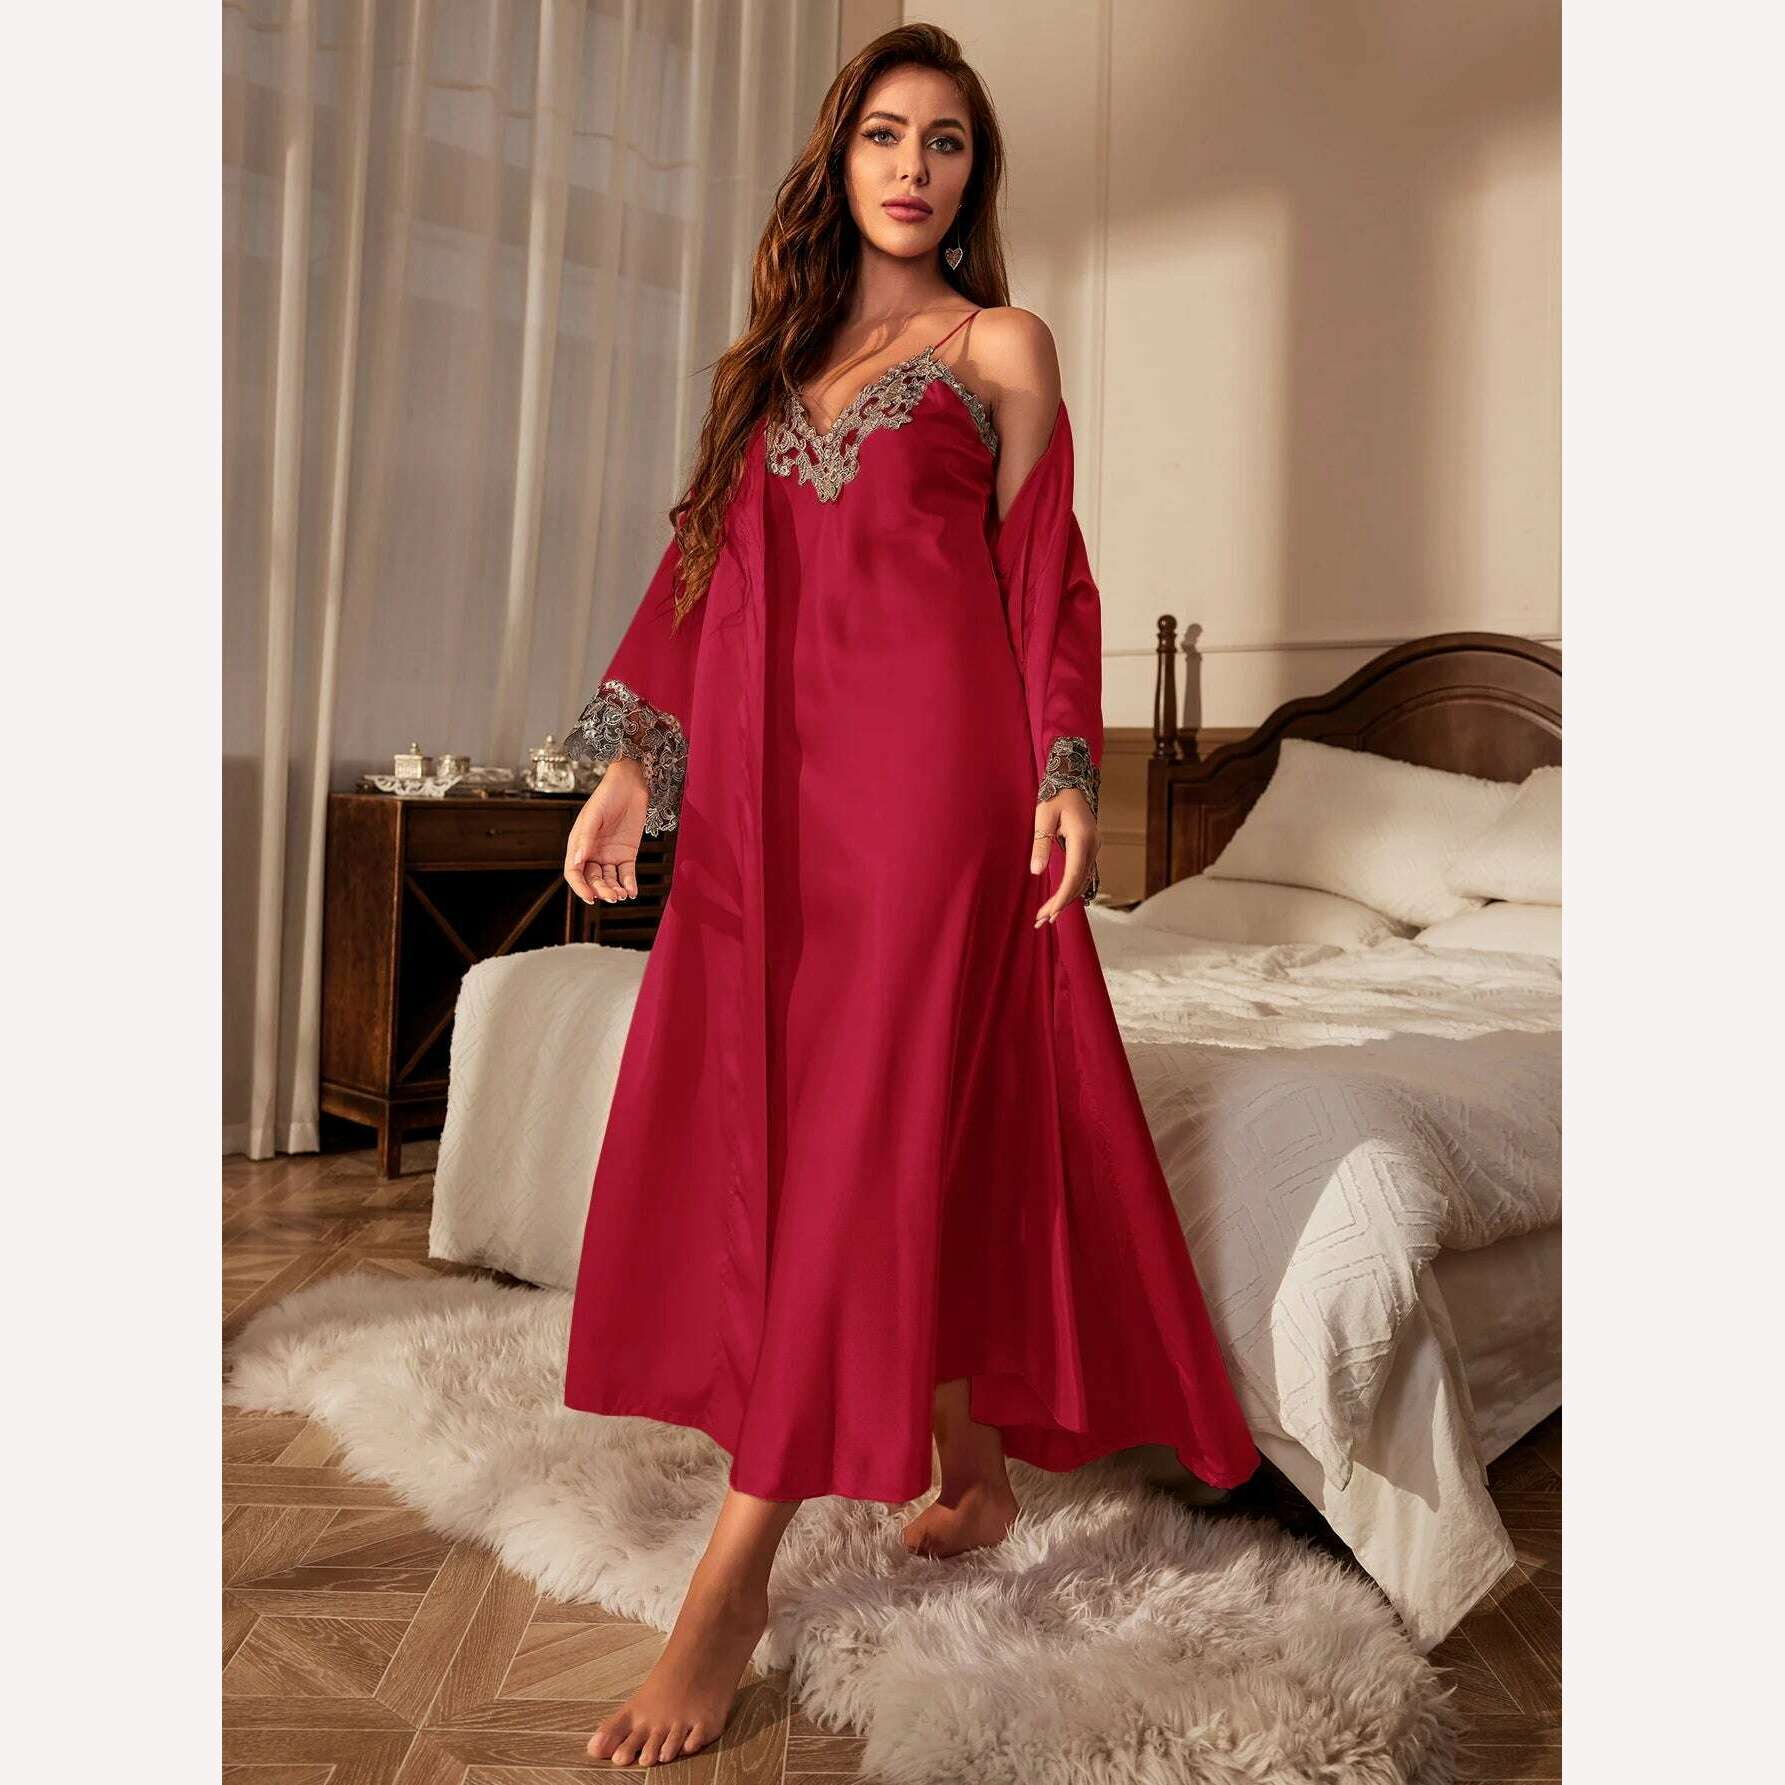 KIMLUD, Contrast Lace Pajama Set Long Sleeve Robe With Belt  V Neck Slip Dress Women's Sleepwear  Loungewear, Red / S, KIMLUD Womens Clothes